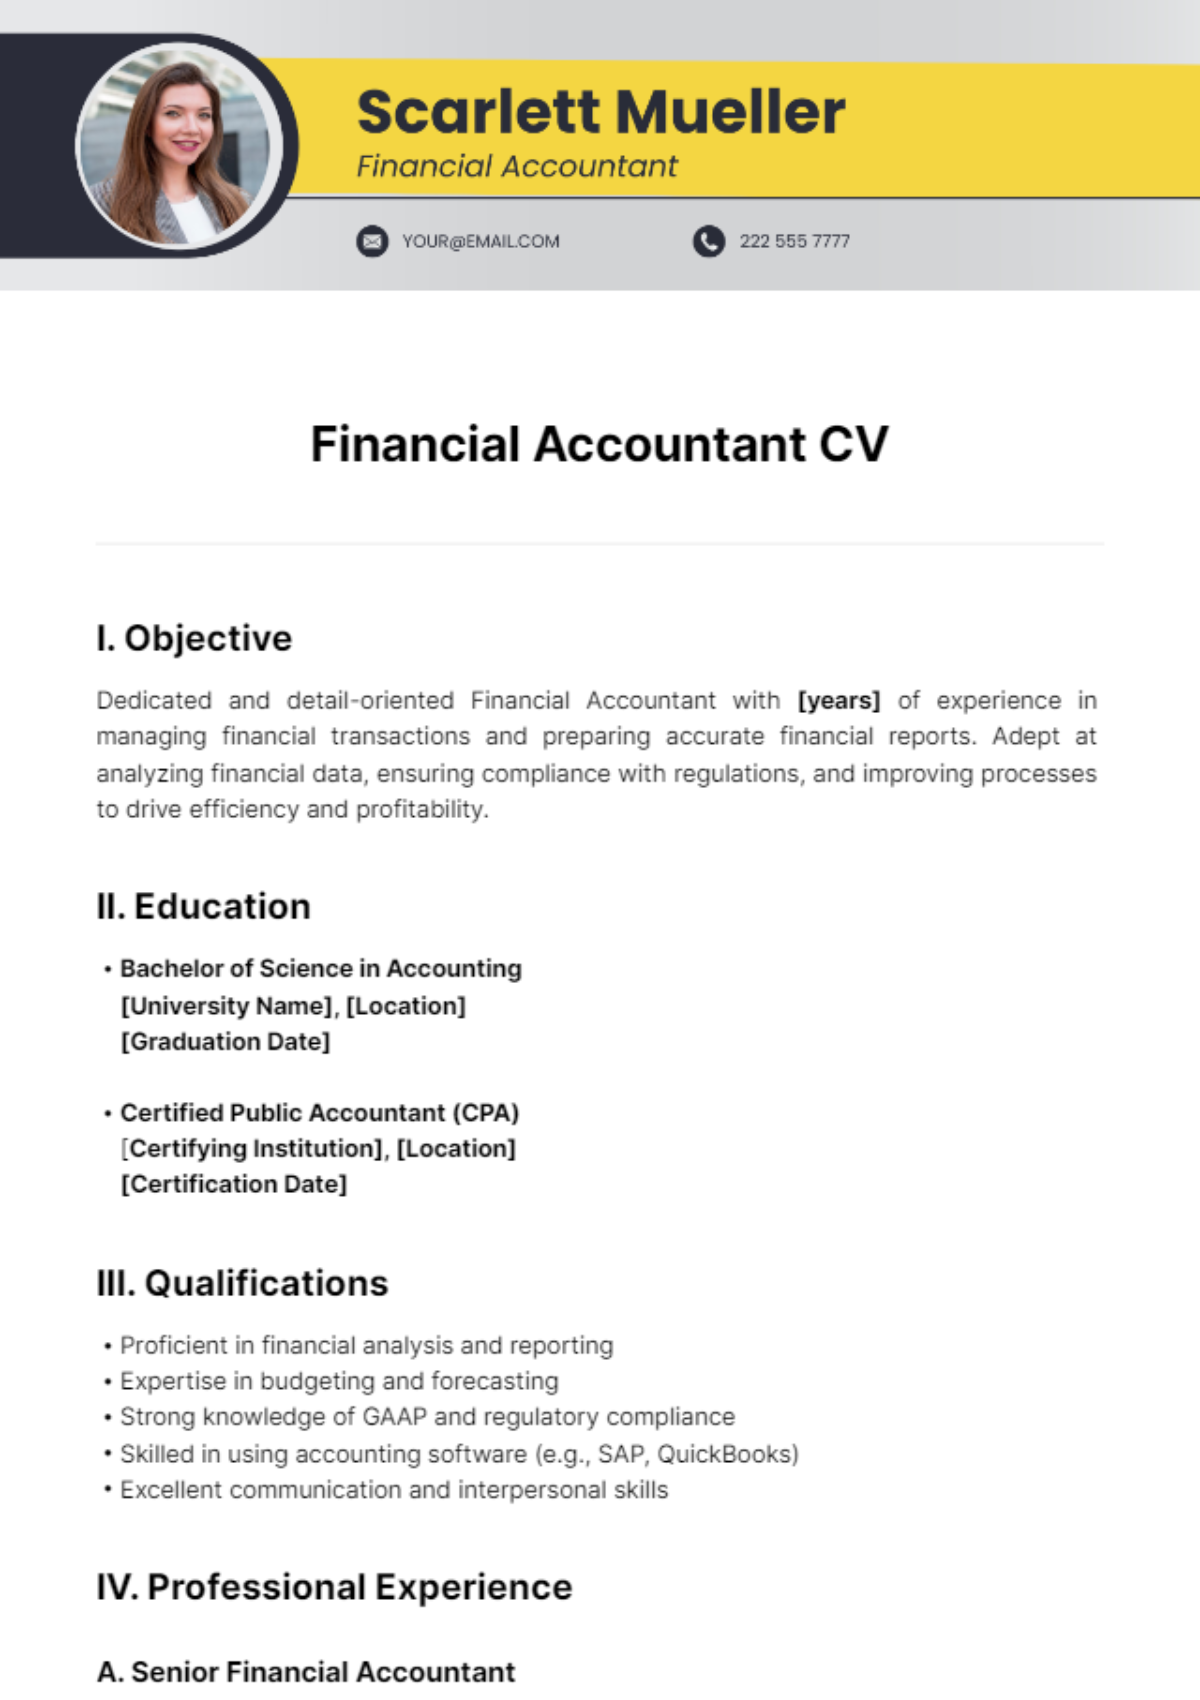 Financial Accountant CV Template